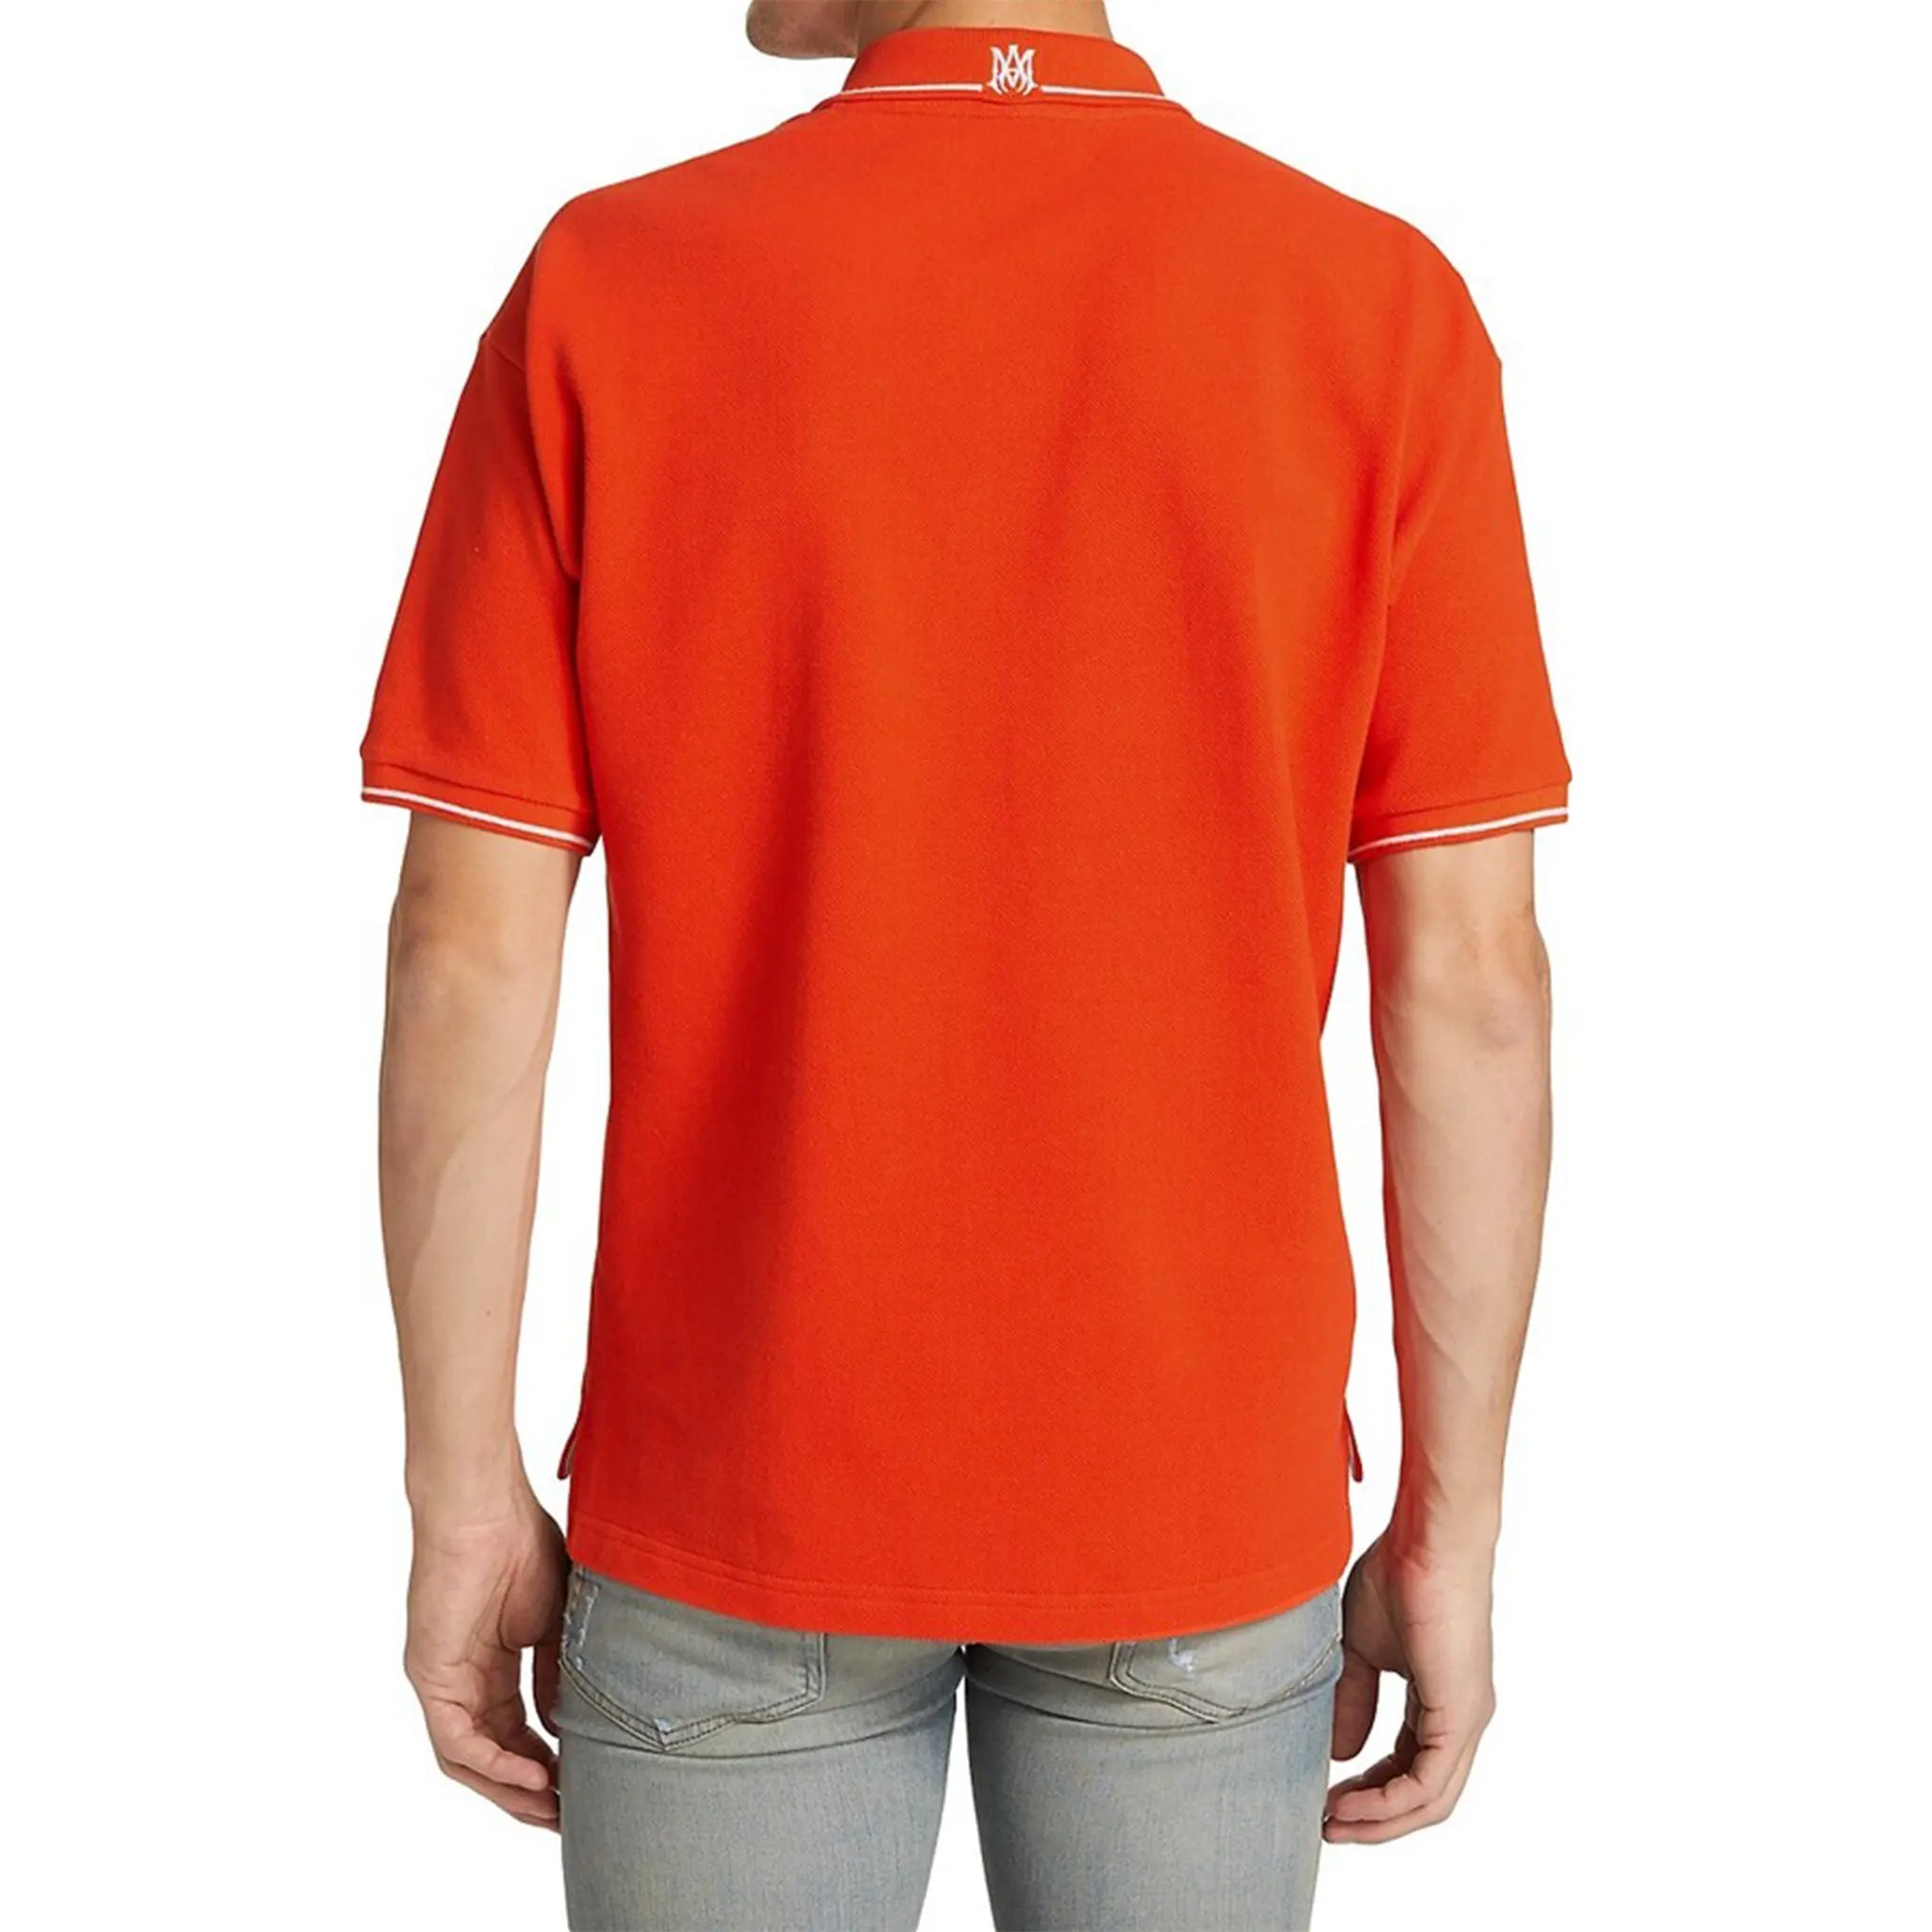 Back view of Amiri Solid Short Sleeve Orange Polo Shirt PF22MSS015-665